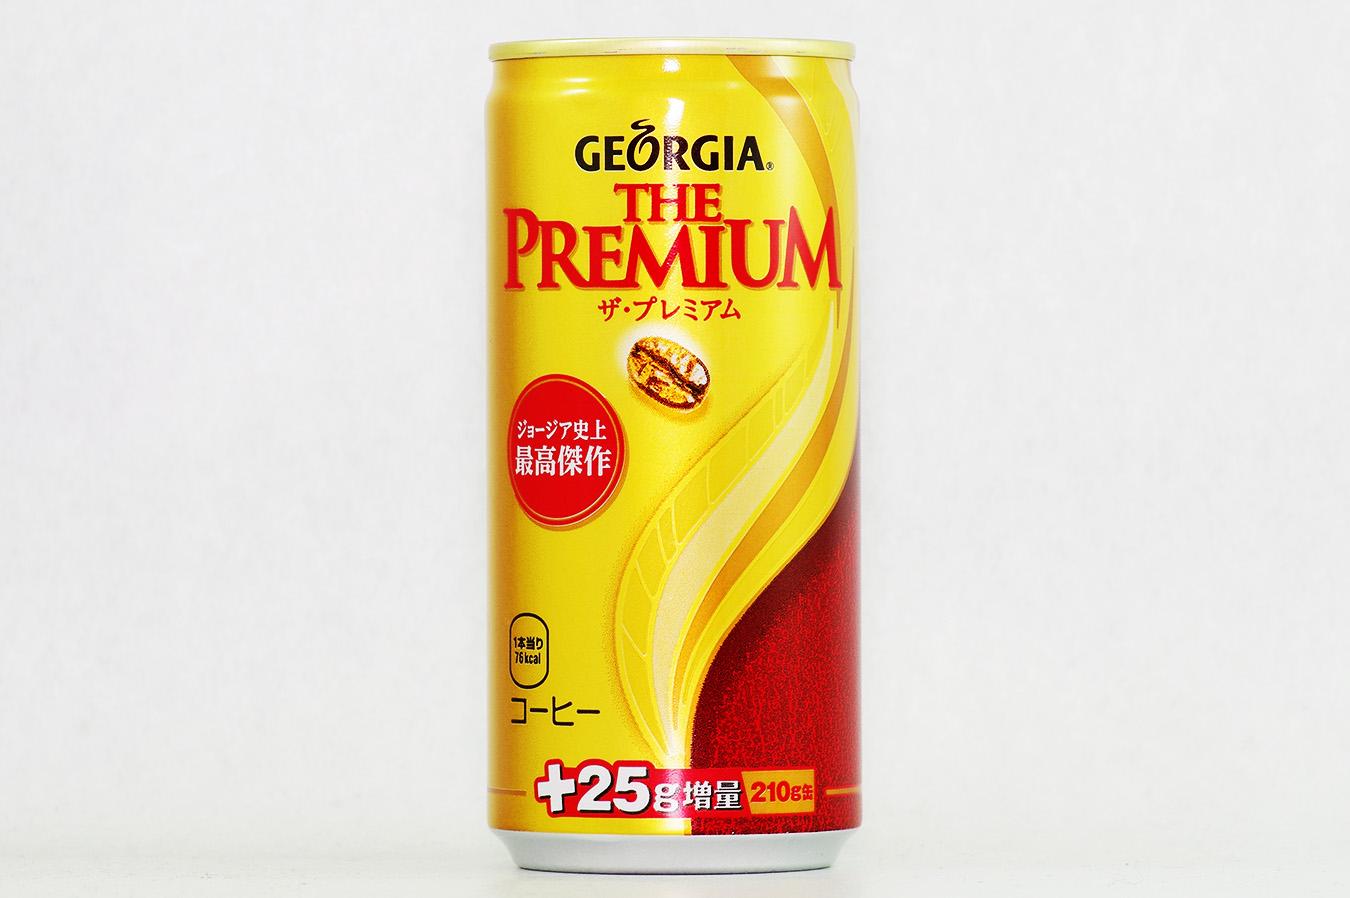 GEORGIA ザ・プレミアム +25g増量210g缶 2016年5月